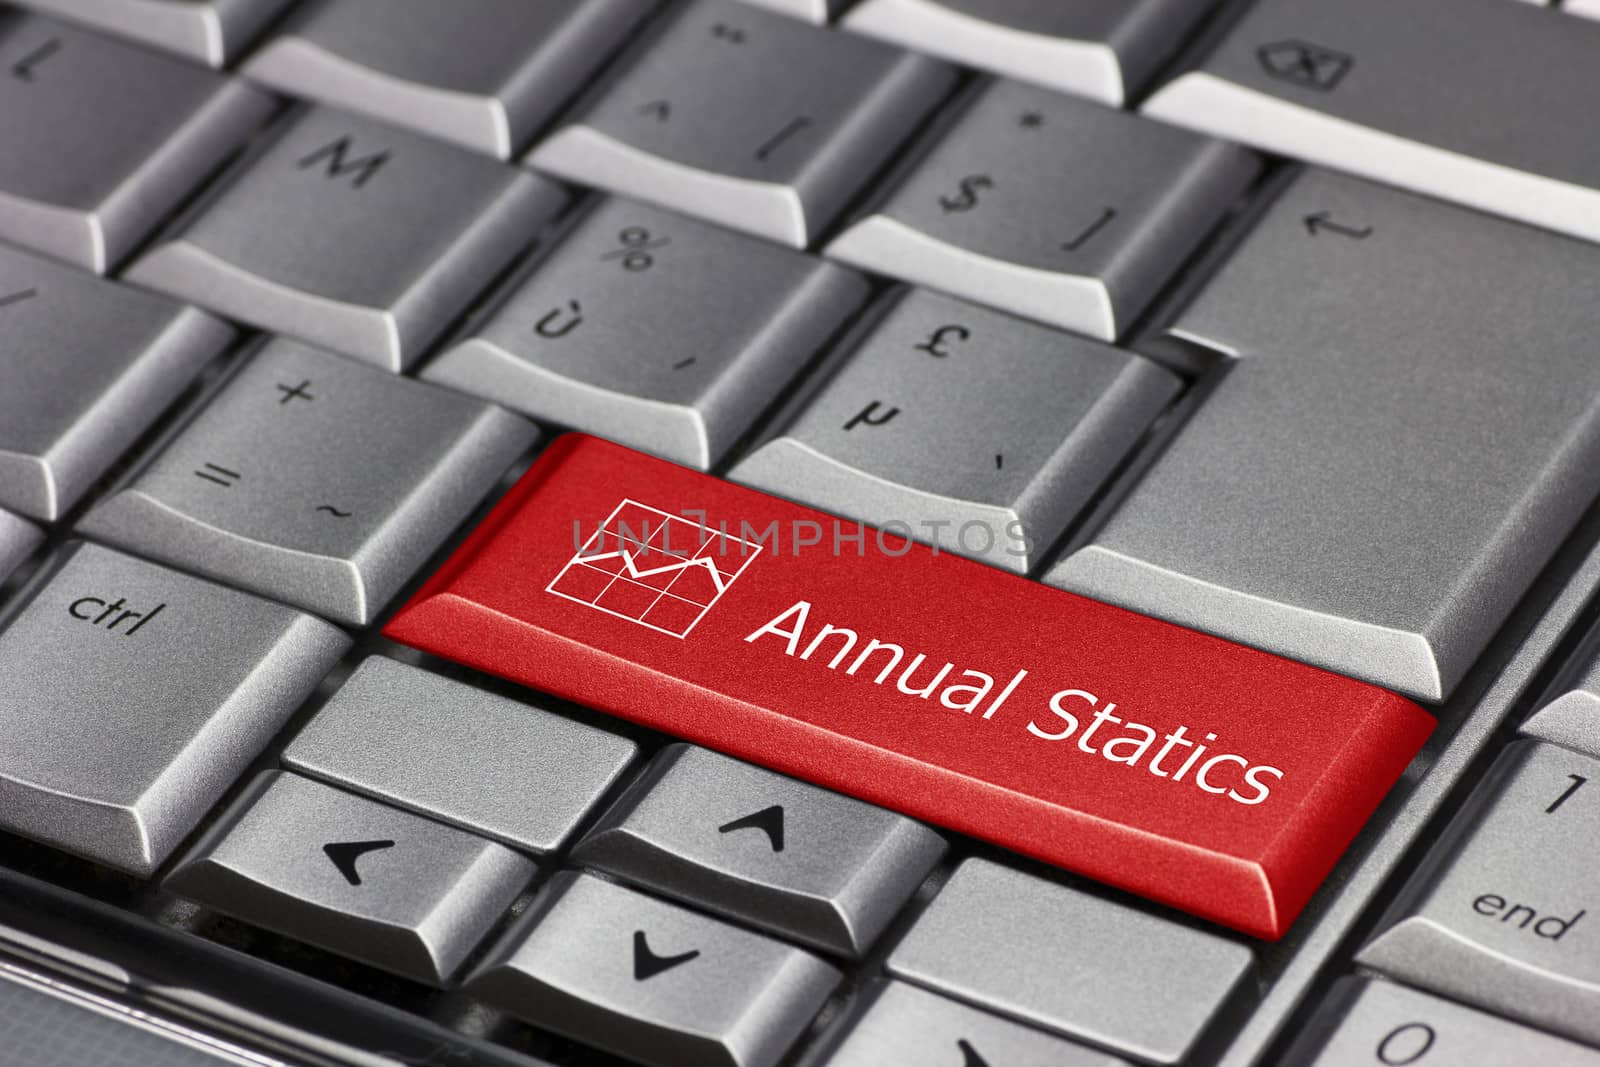 Coputer key - Annual Statistics by jurgenfr